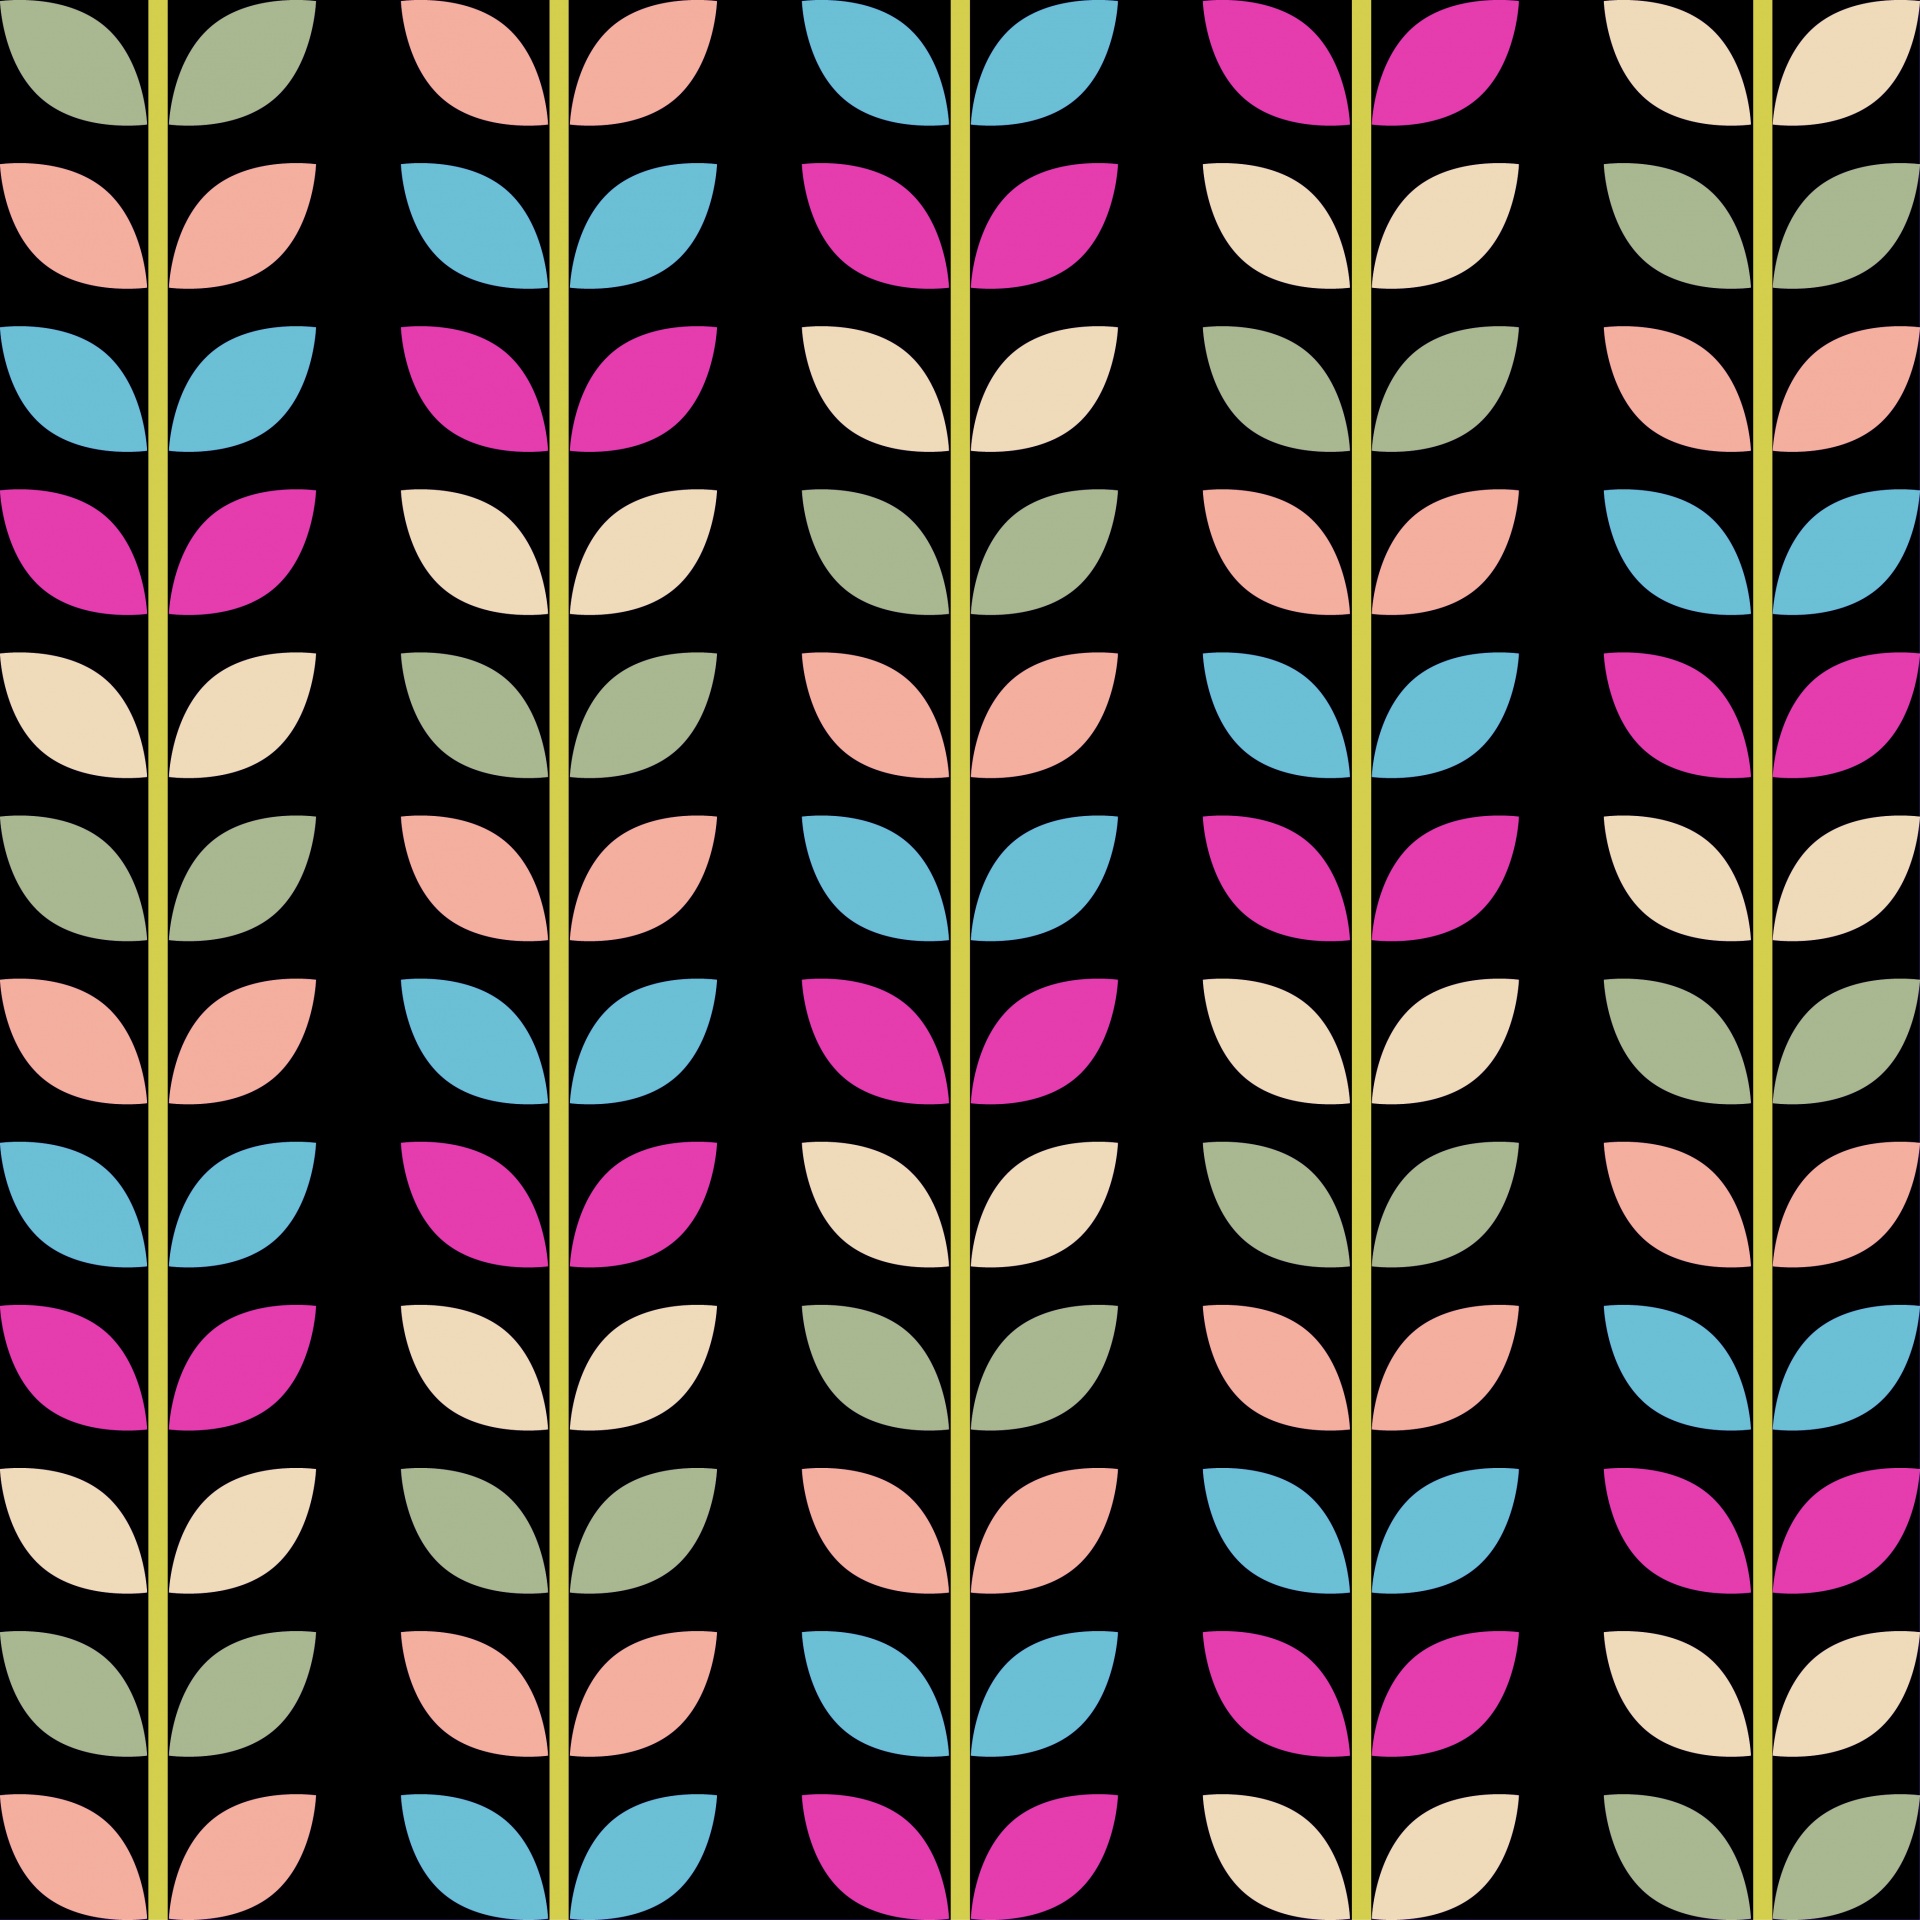 Listy Tapeta vzorek pozadí